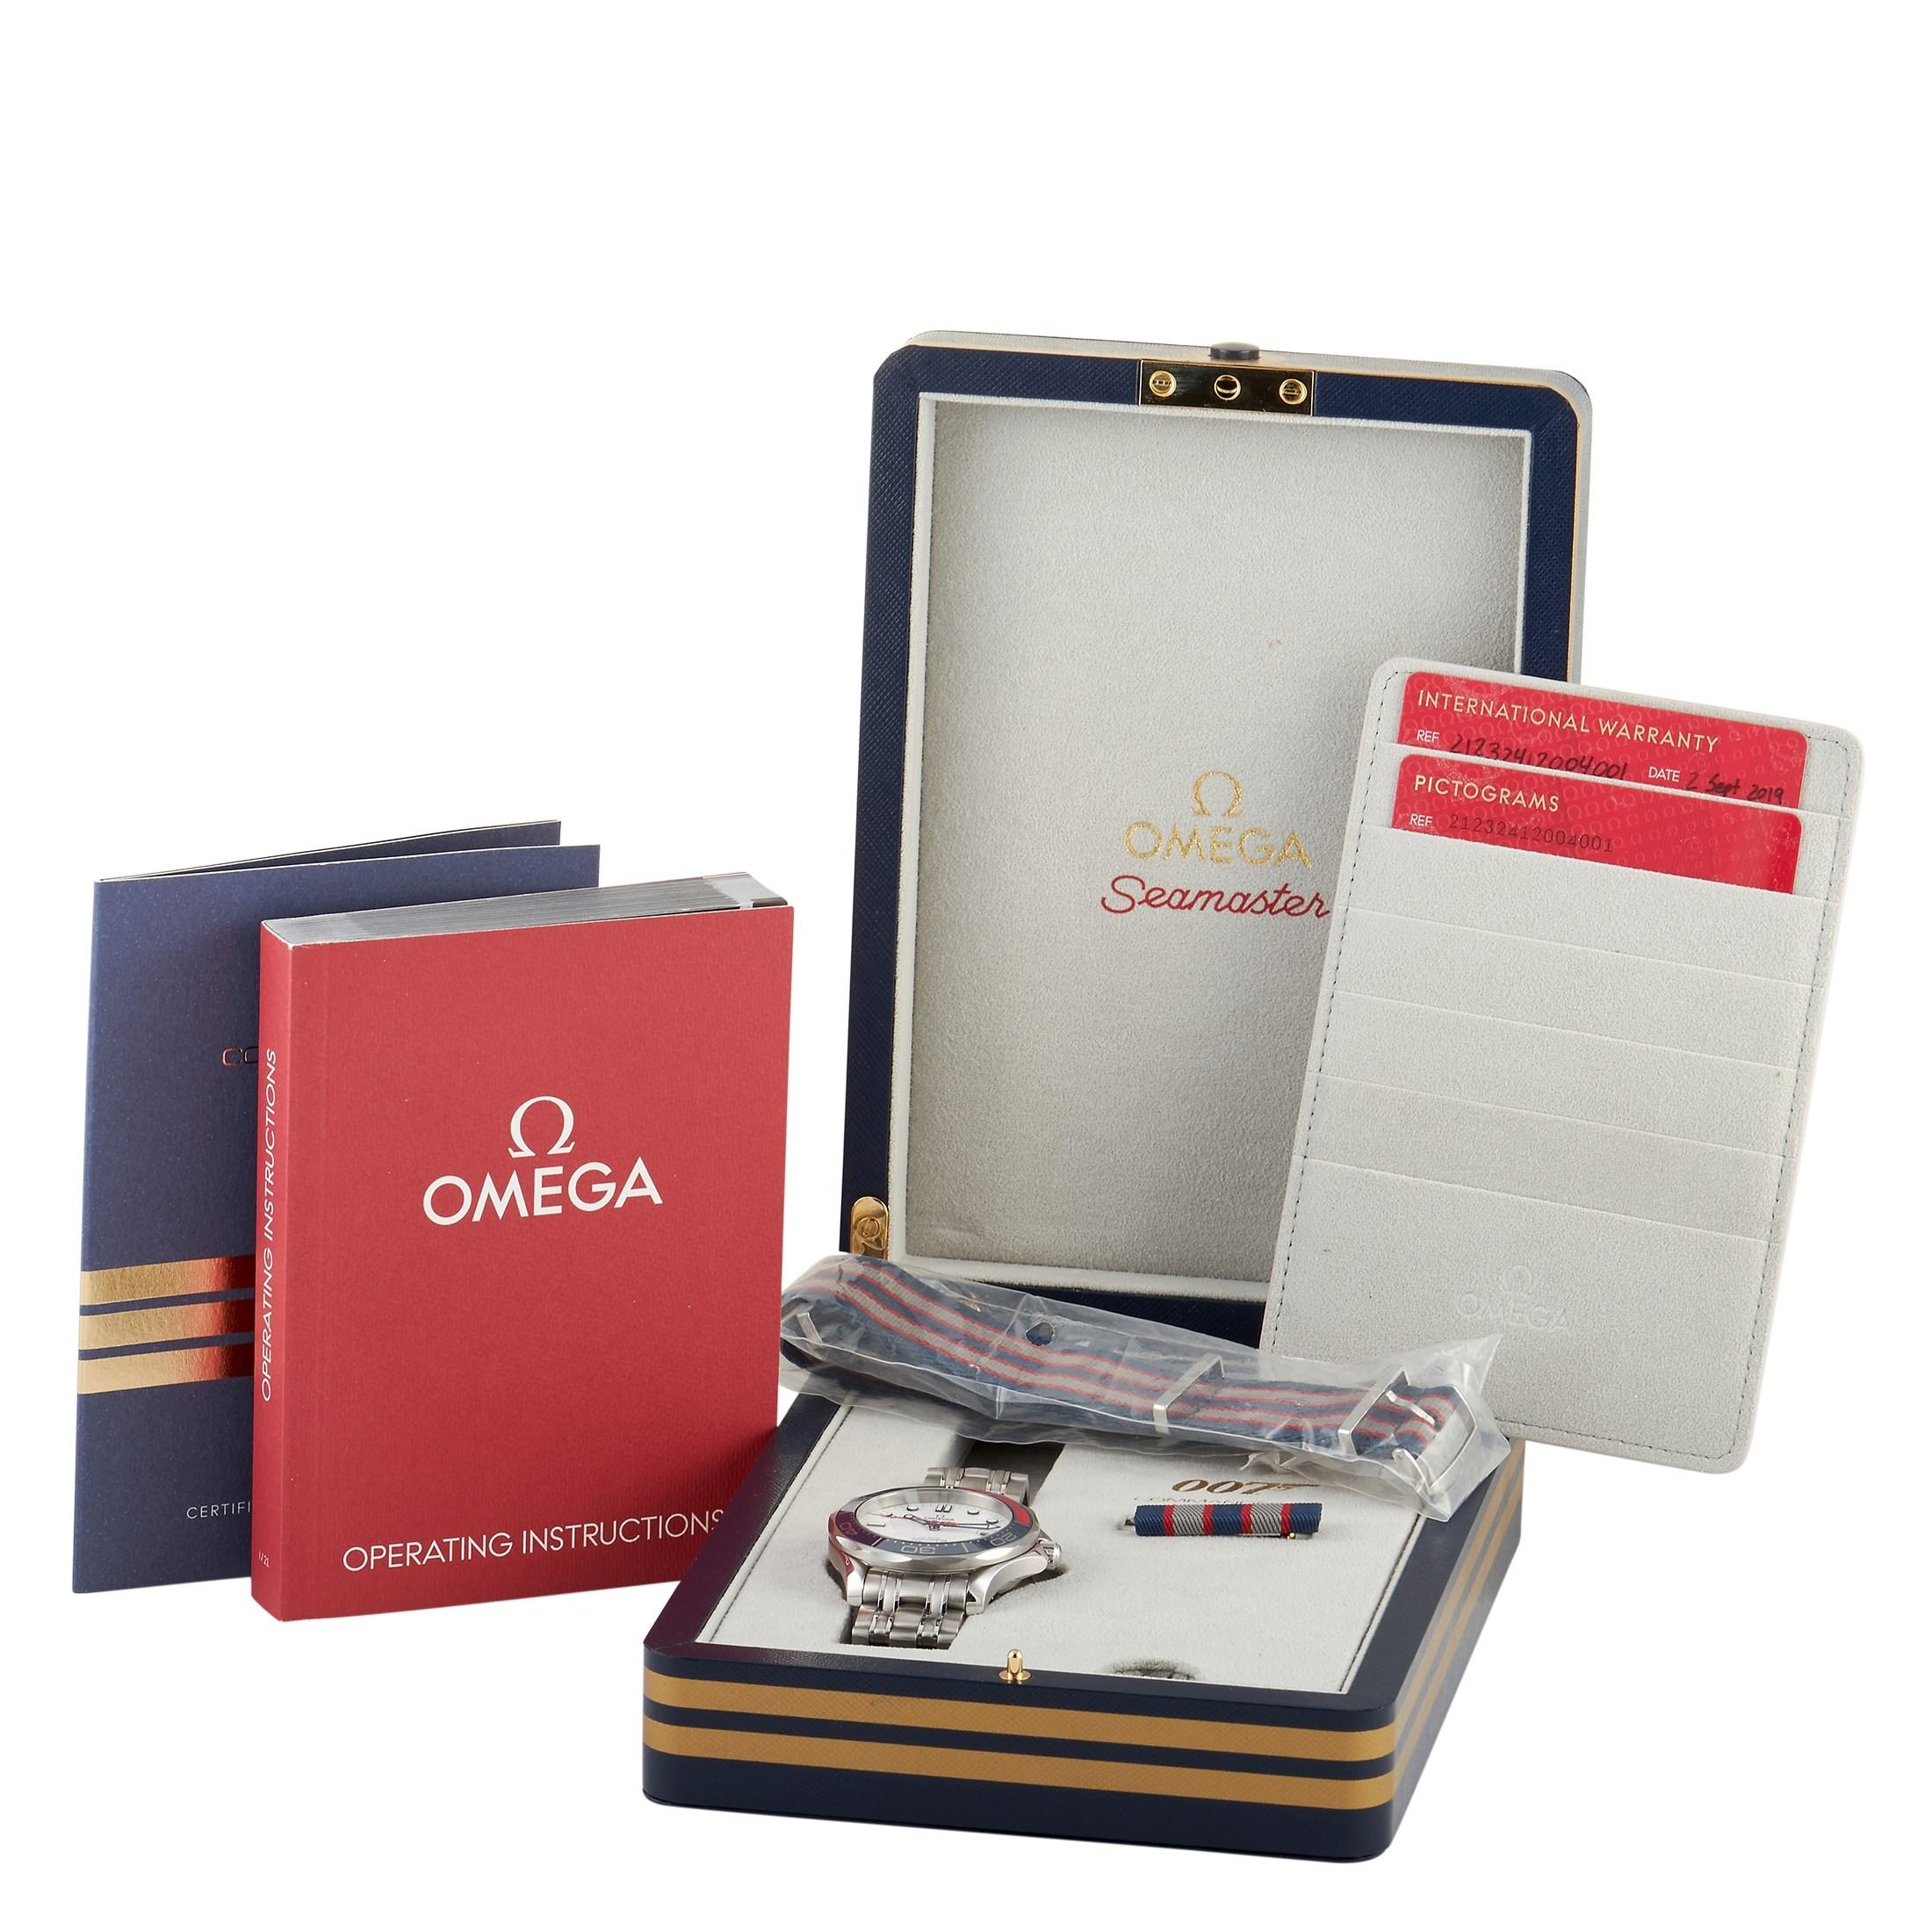 omega seamaster james bond 007 limited edition